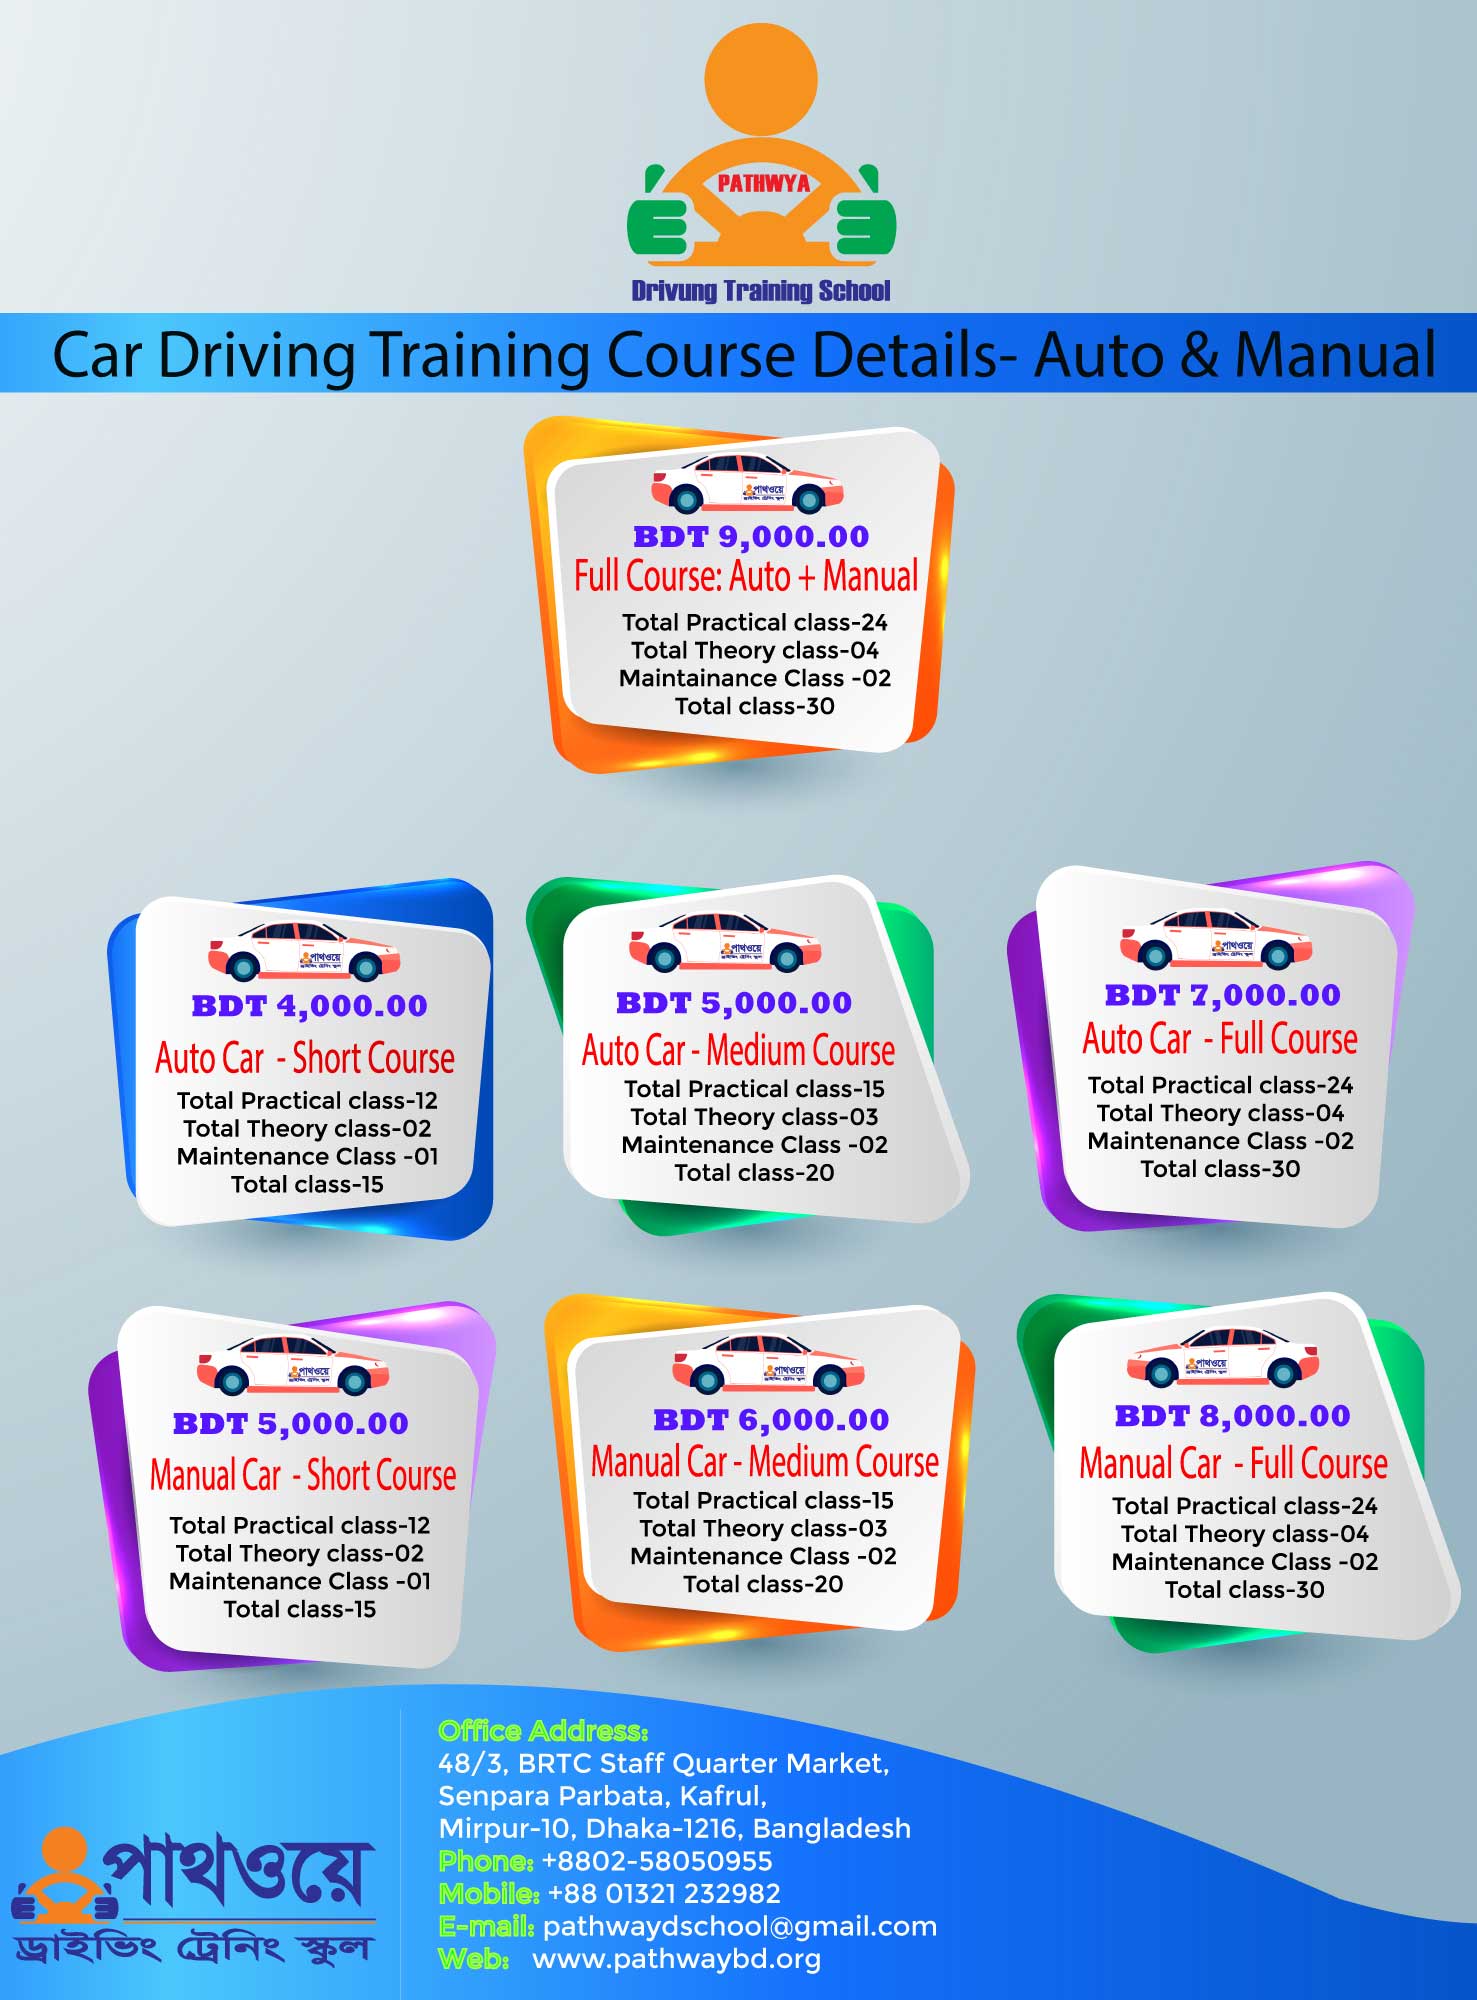 Car Driving Training Full Course fee, Auto + Manual | অটো ও ম্যানুয়াল কার গাড়ী ড্রাইভিং ট্রেনিং কোর্স ফি 